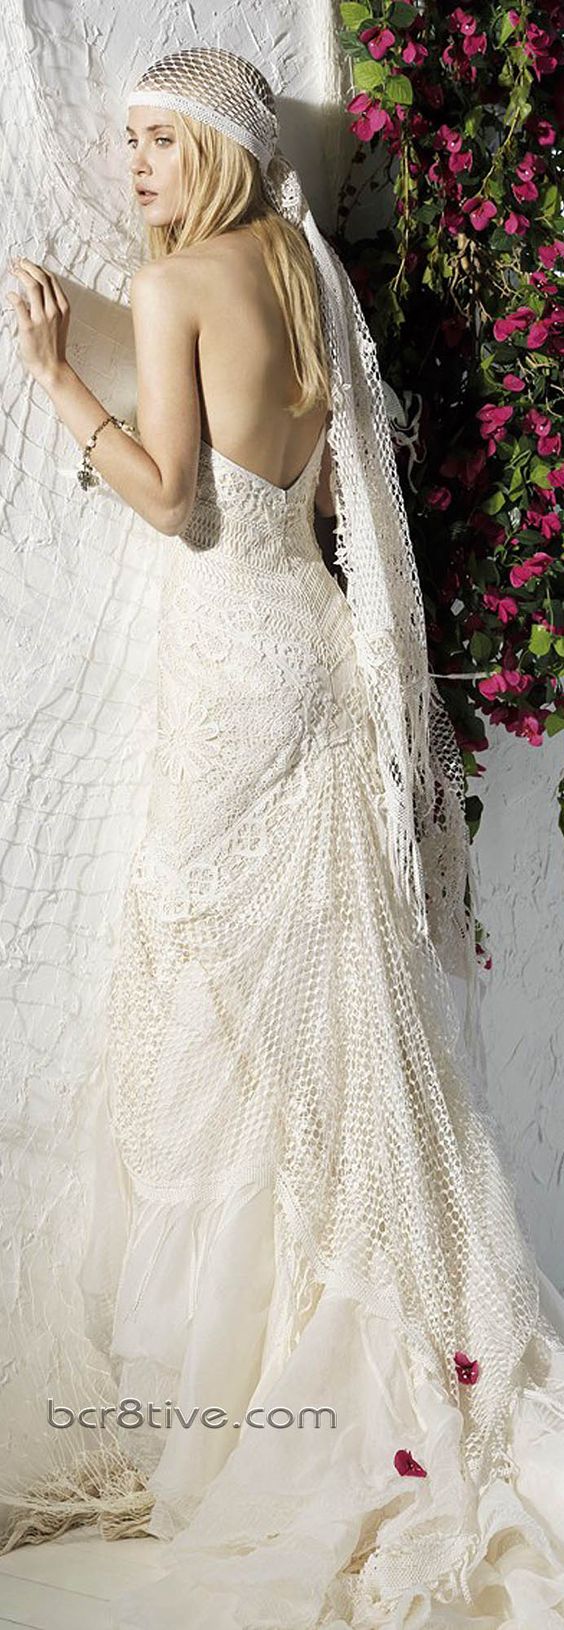 32 Bohemian Wedding Dresses Brides will Love for 2019 – Trendy Wedding ...